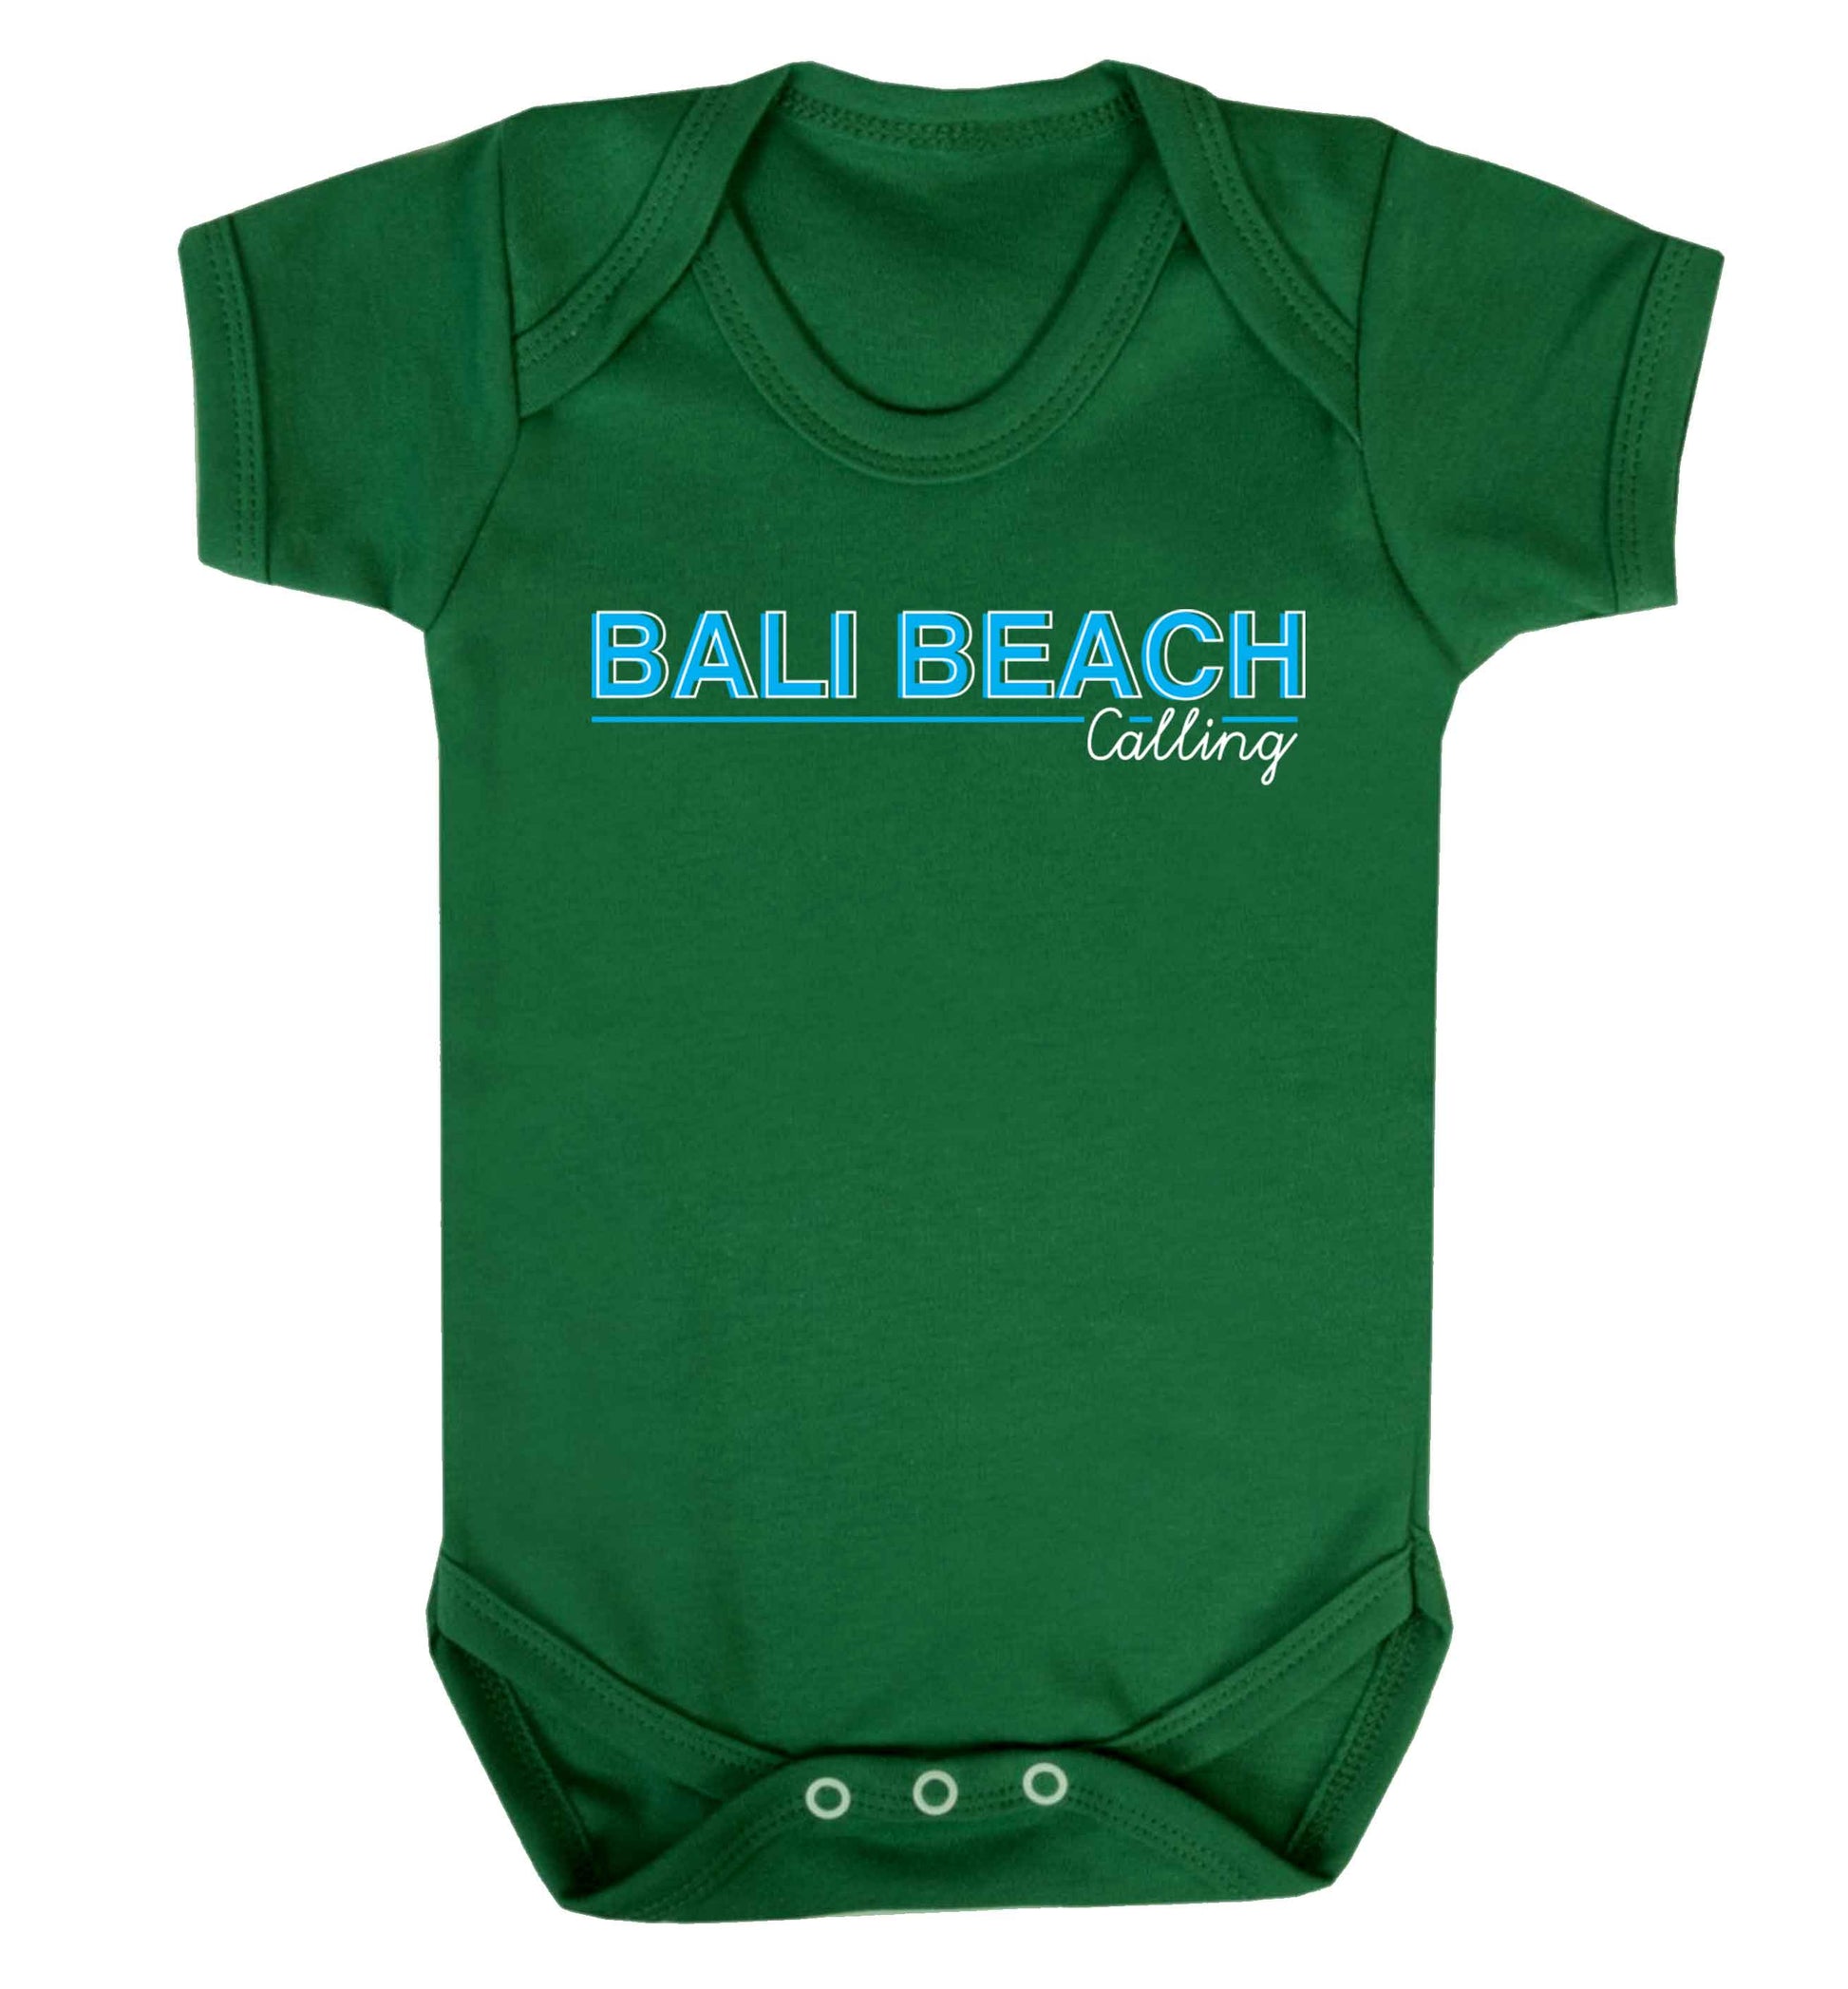 Bali beach calling Baby Vest green 18-24 months